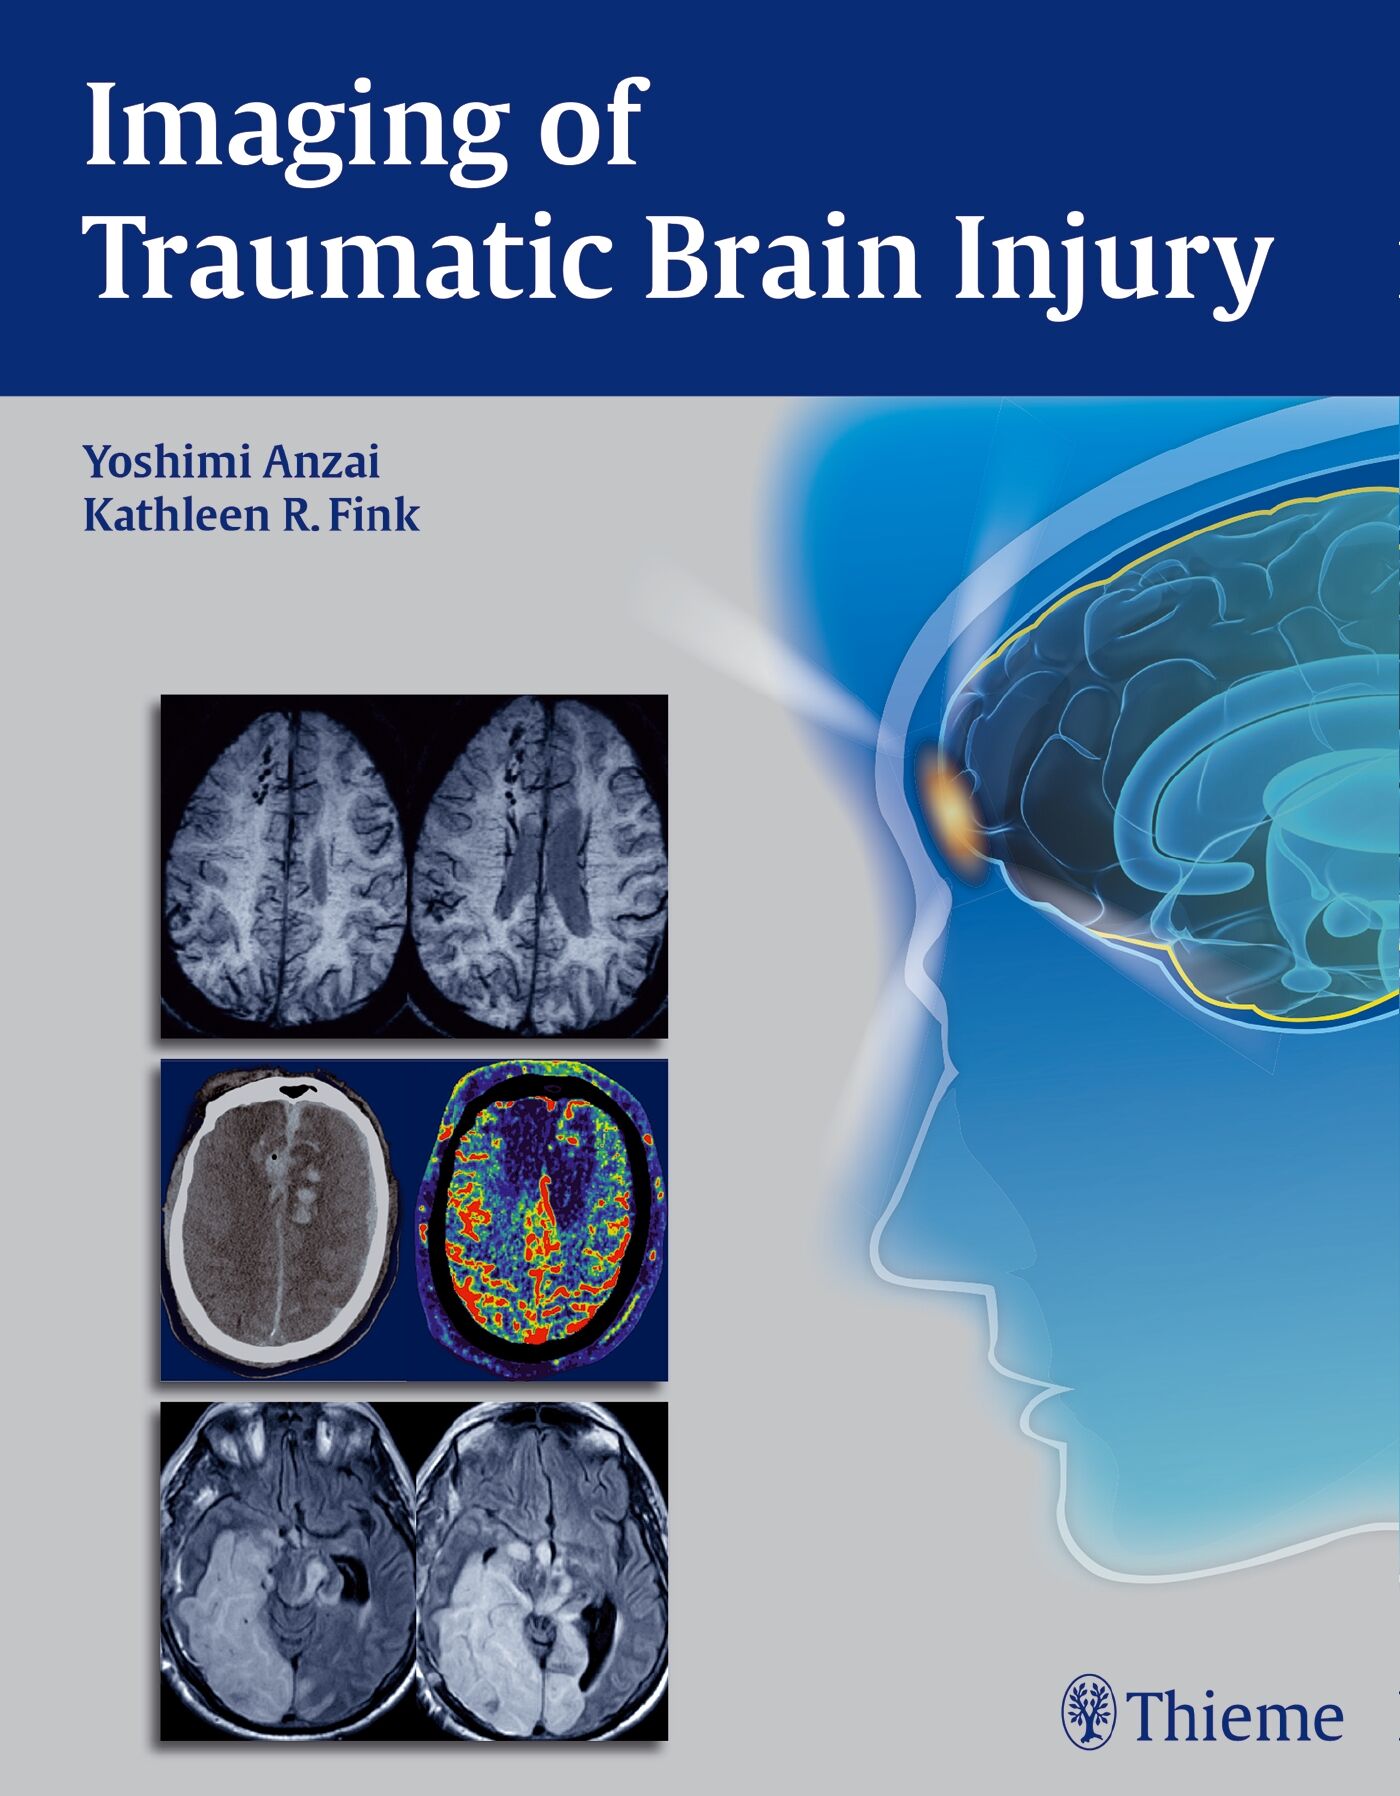 Imaging of Traumatic Brain Injury, 9781604067286